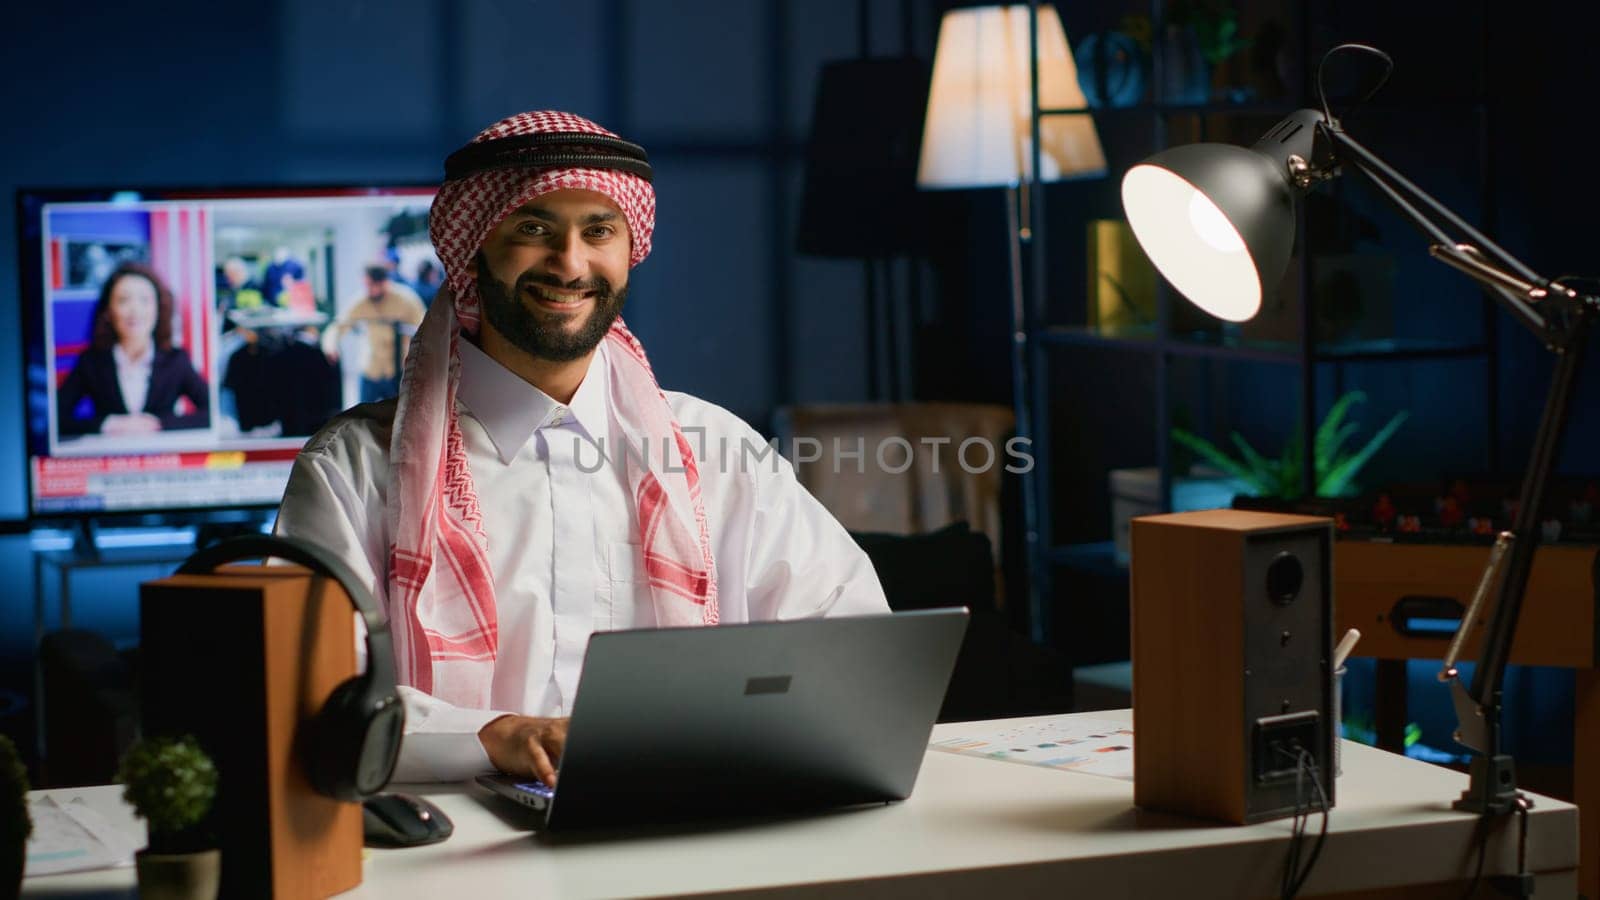 Portrait of Arab man typing on laptop by DCStudio